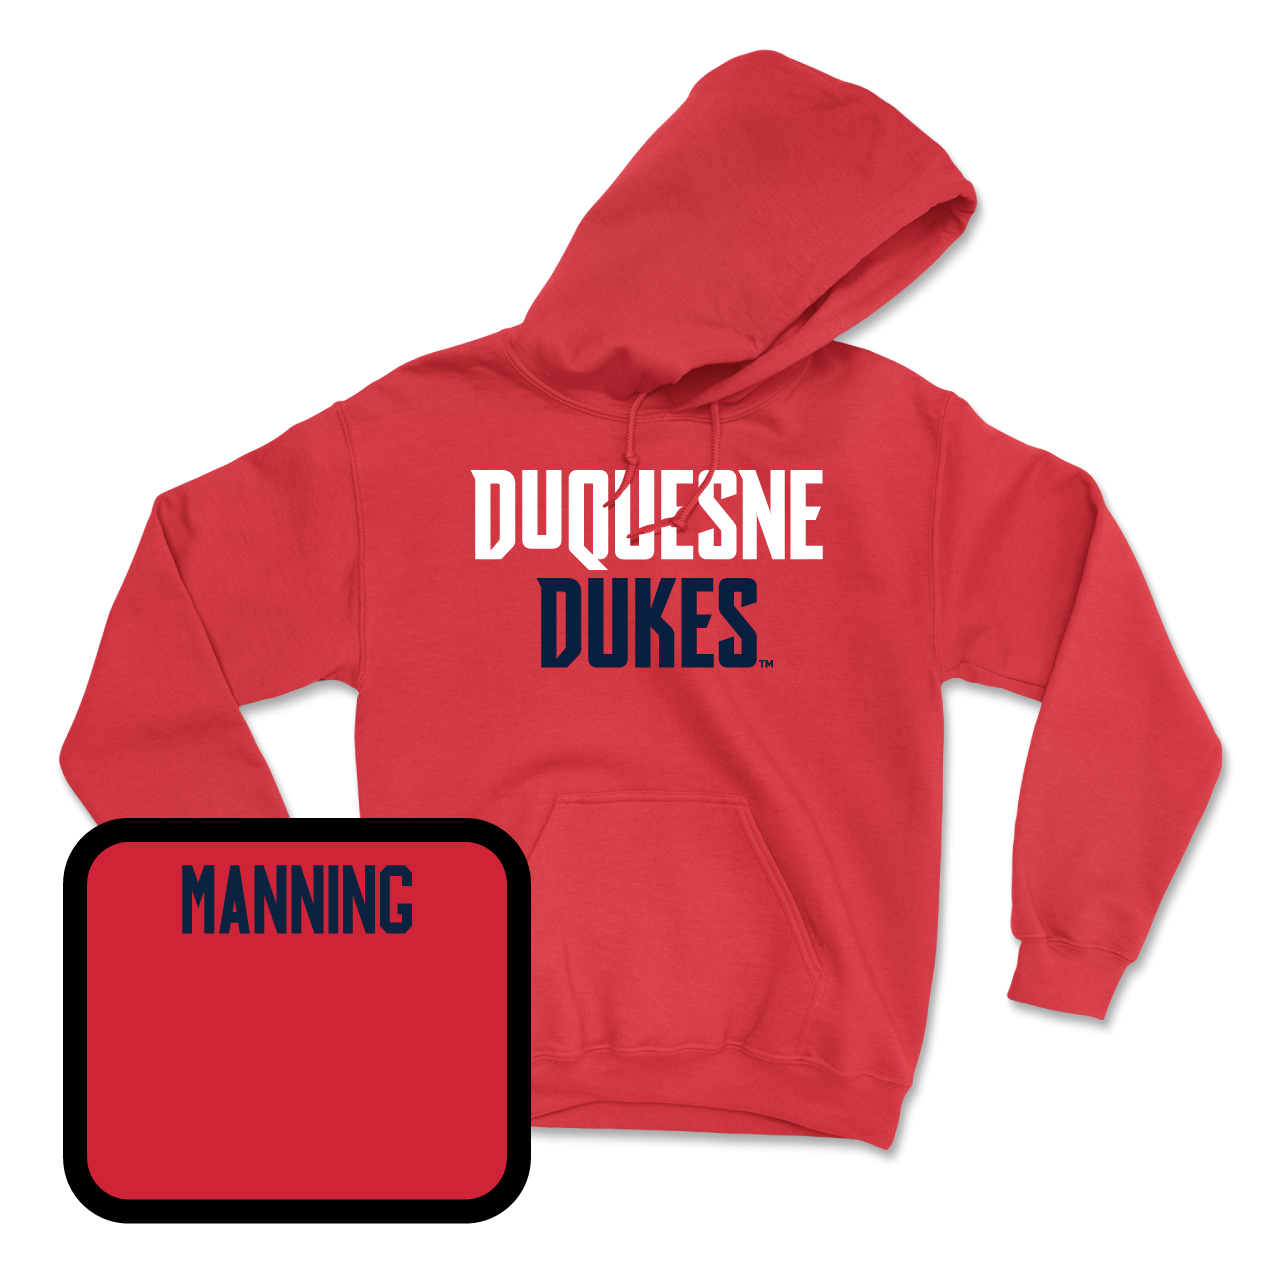 Duquesne Men's Tennis Red Dukes Hoodie